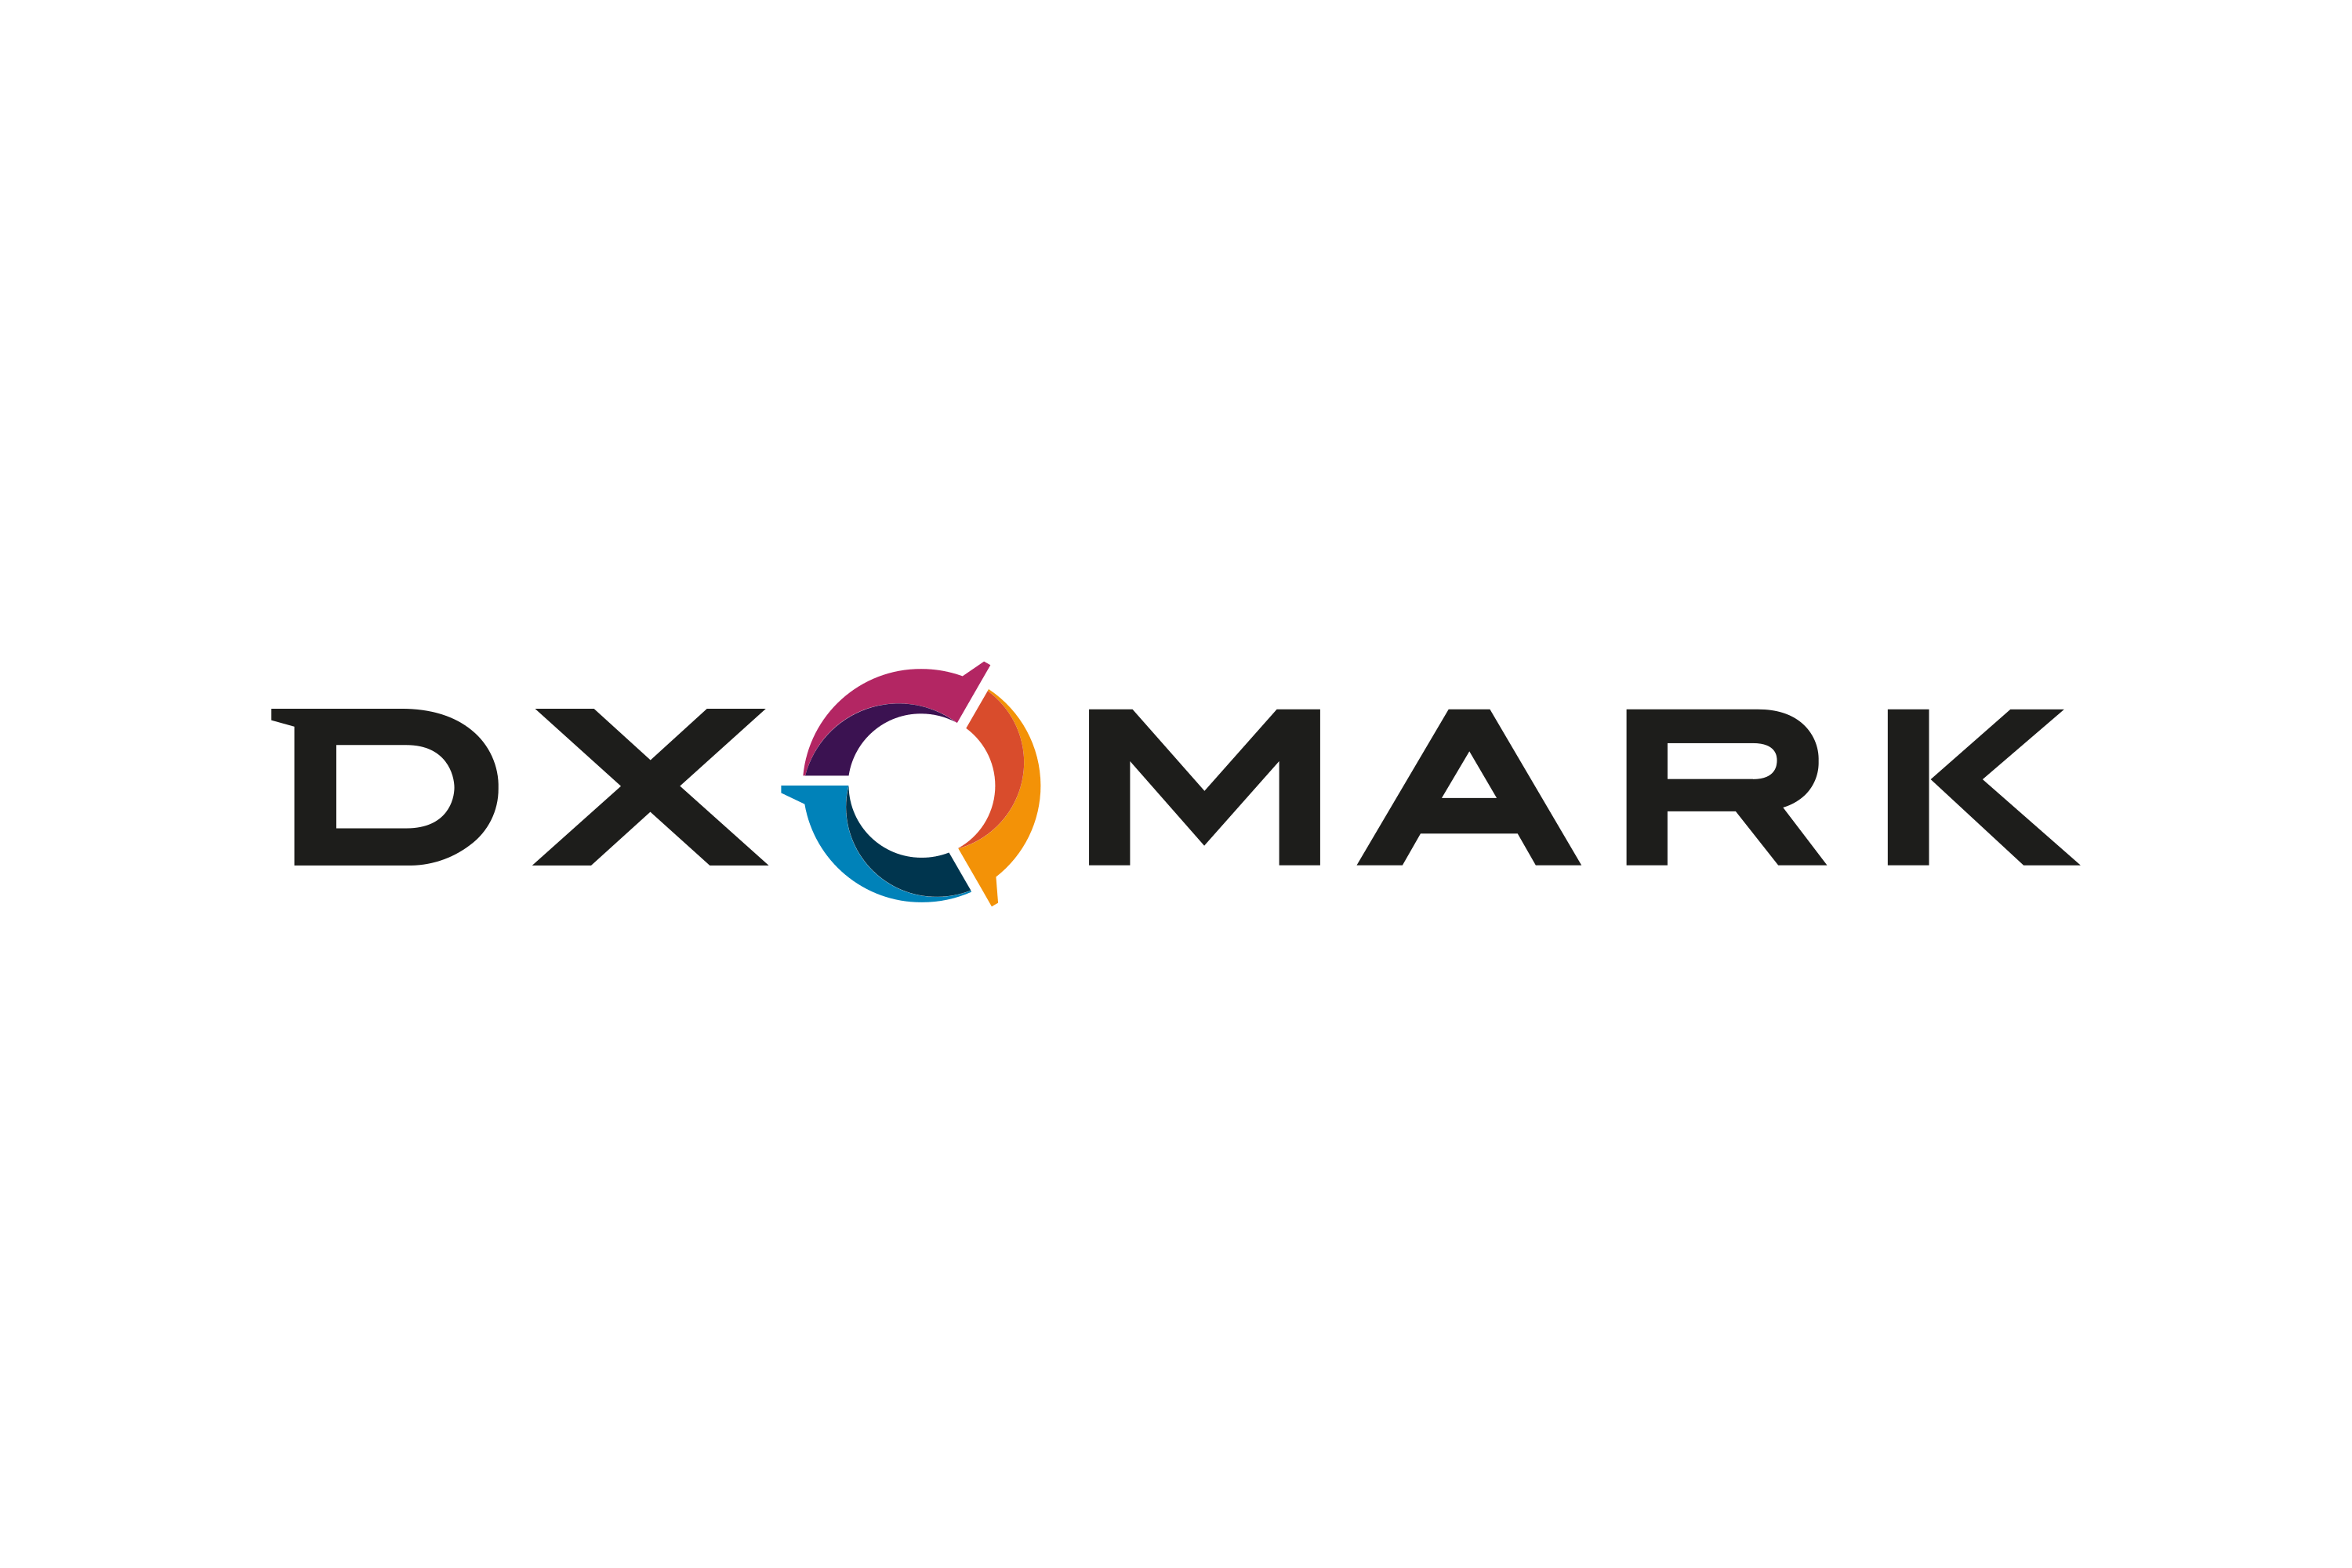 Диксомарк. DXOMARK лого. DXOMARK logo. Display DXOMARK logo.